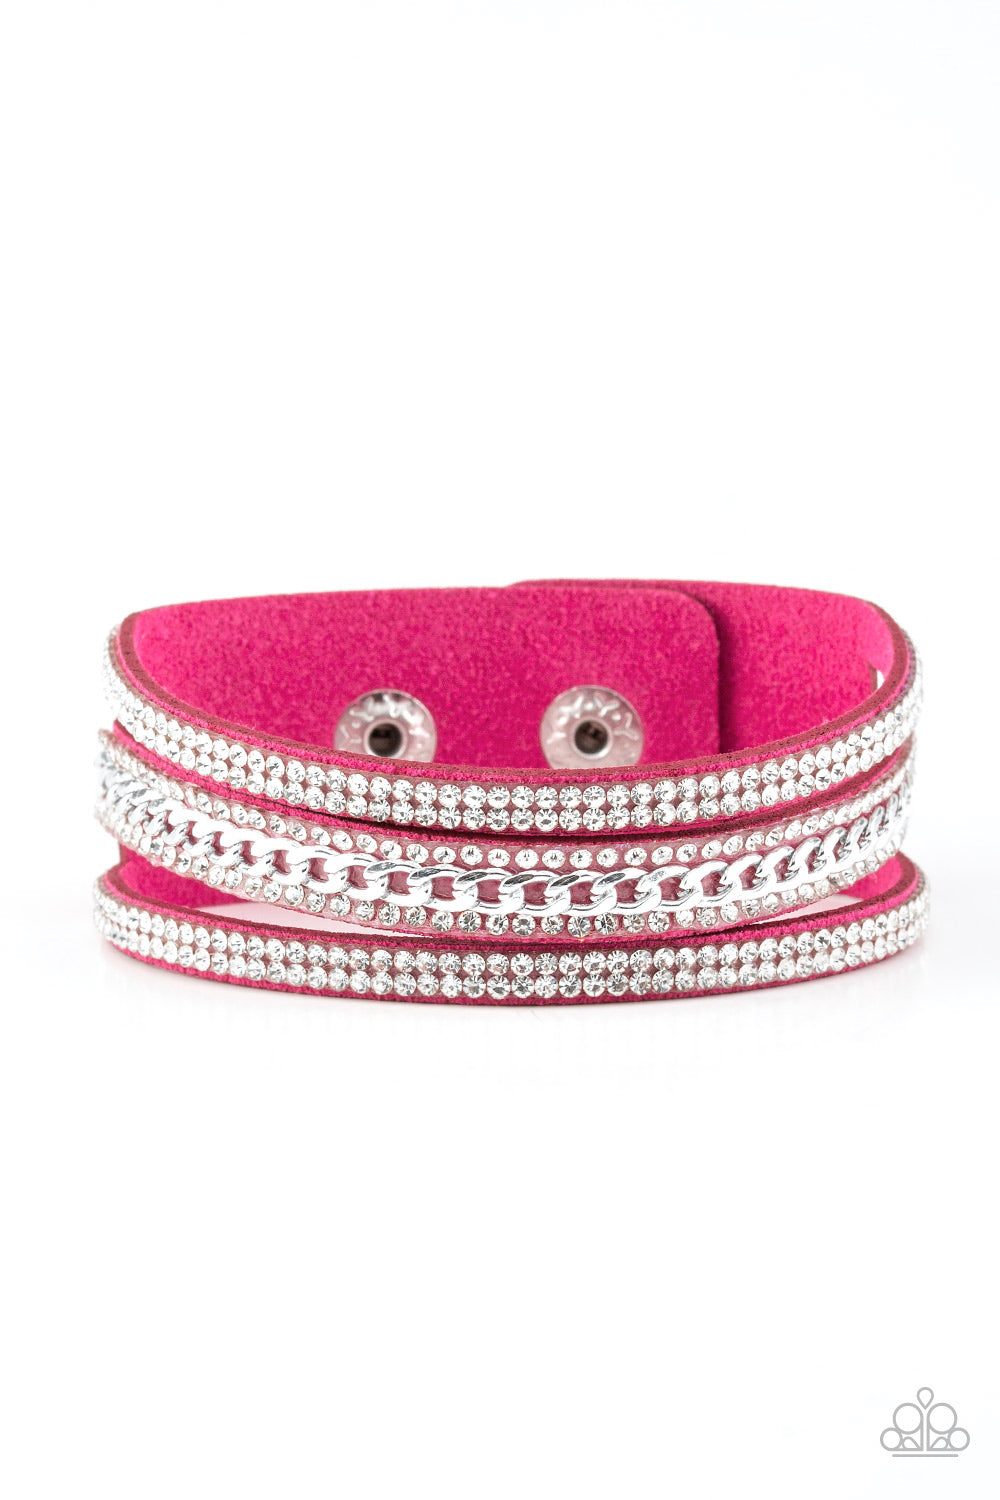 Paparazzi Accessories - Rollin' In Rhinestones - Pink Snap Bracelet - Alies Bling Bar